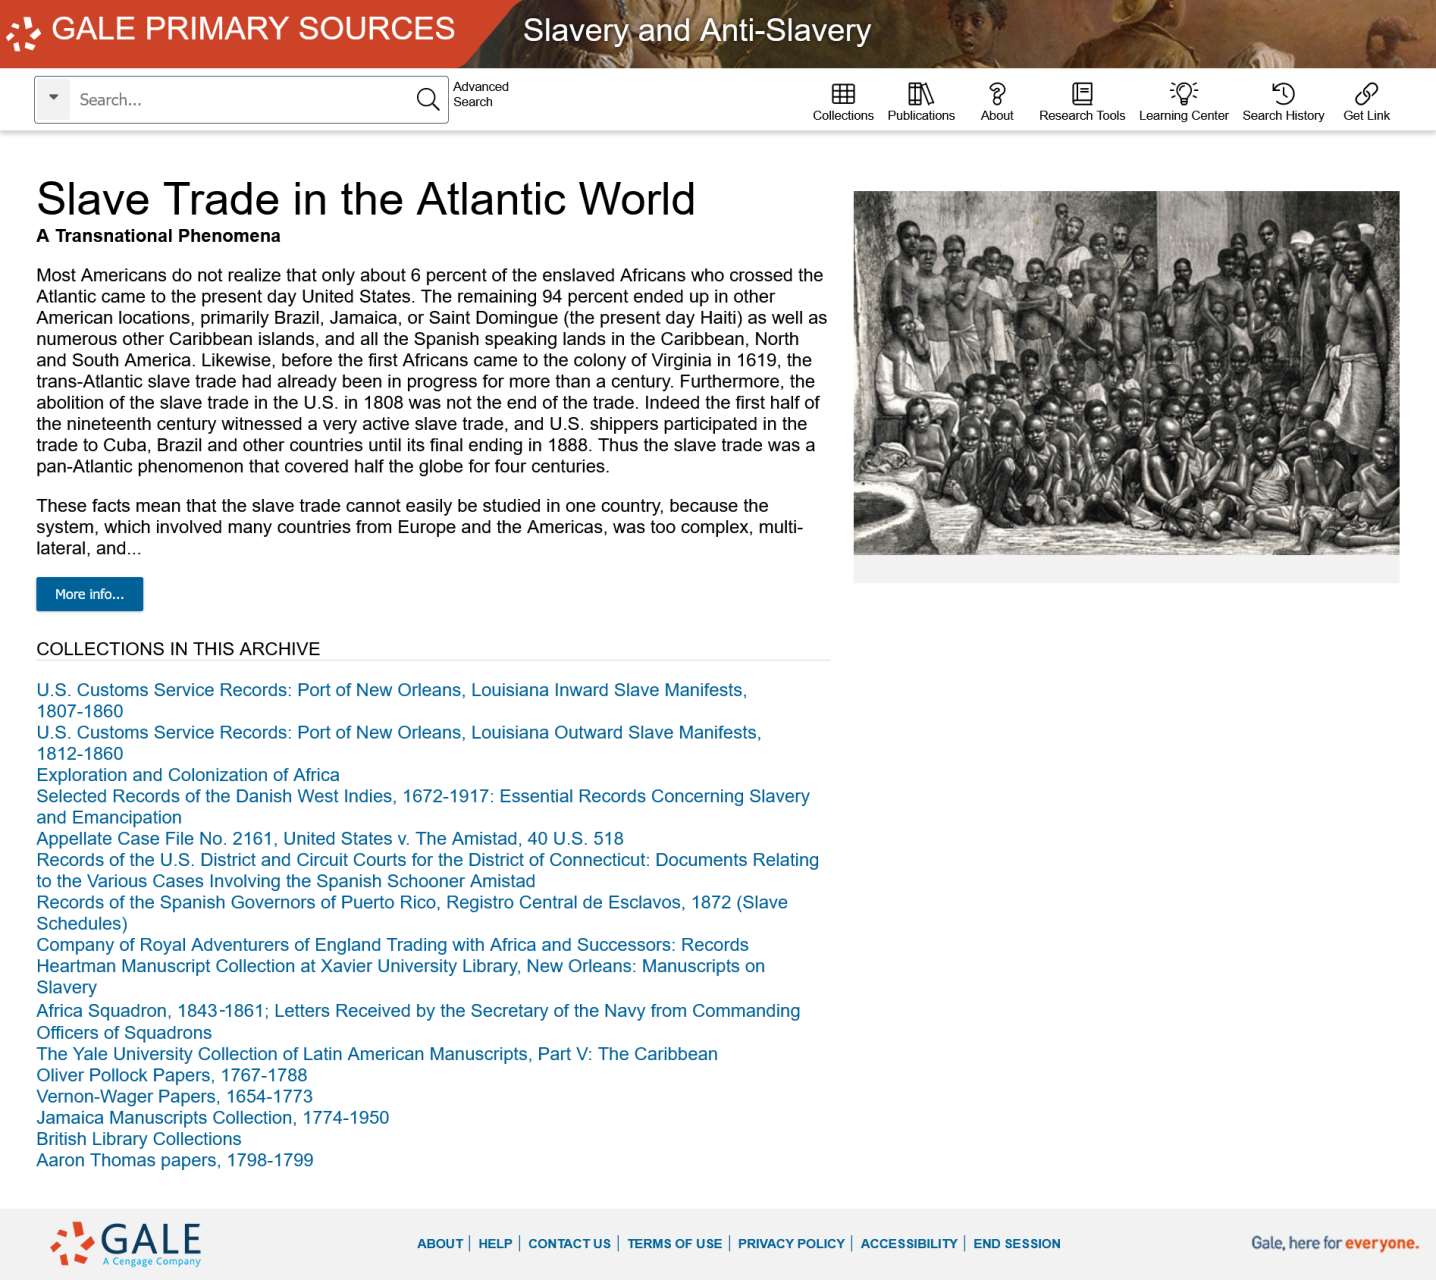 Slavery and Anti-Slavery: A Transnational Archive第２部の概要画面